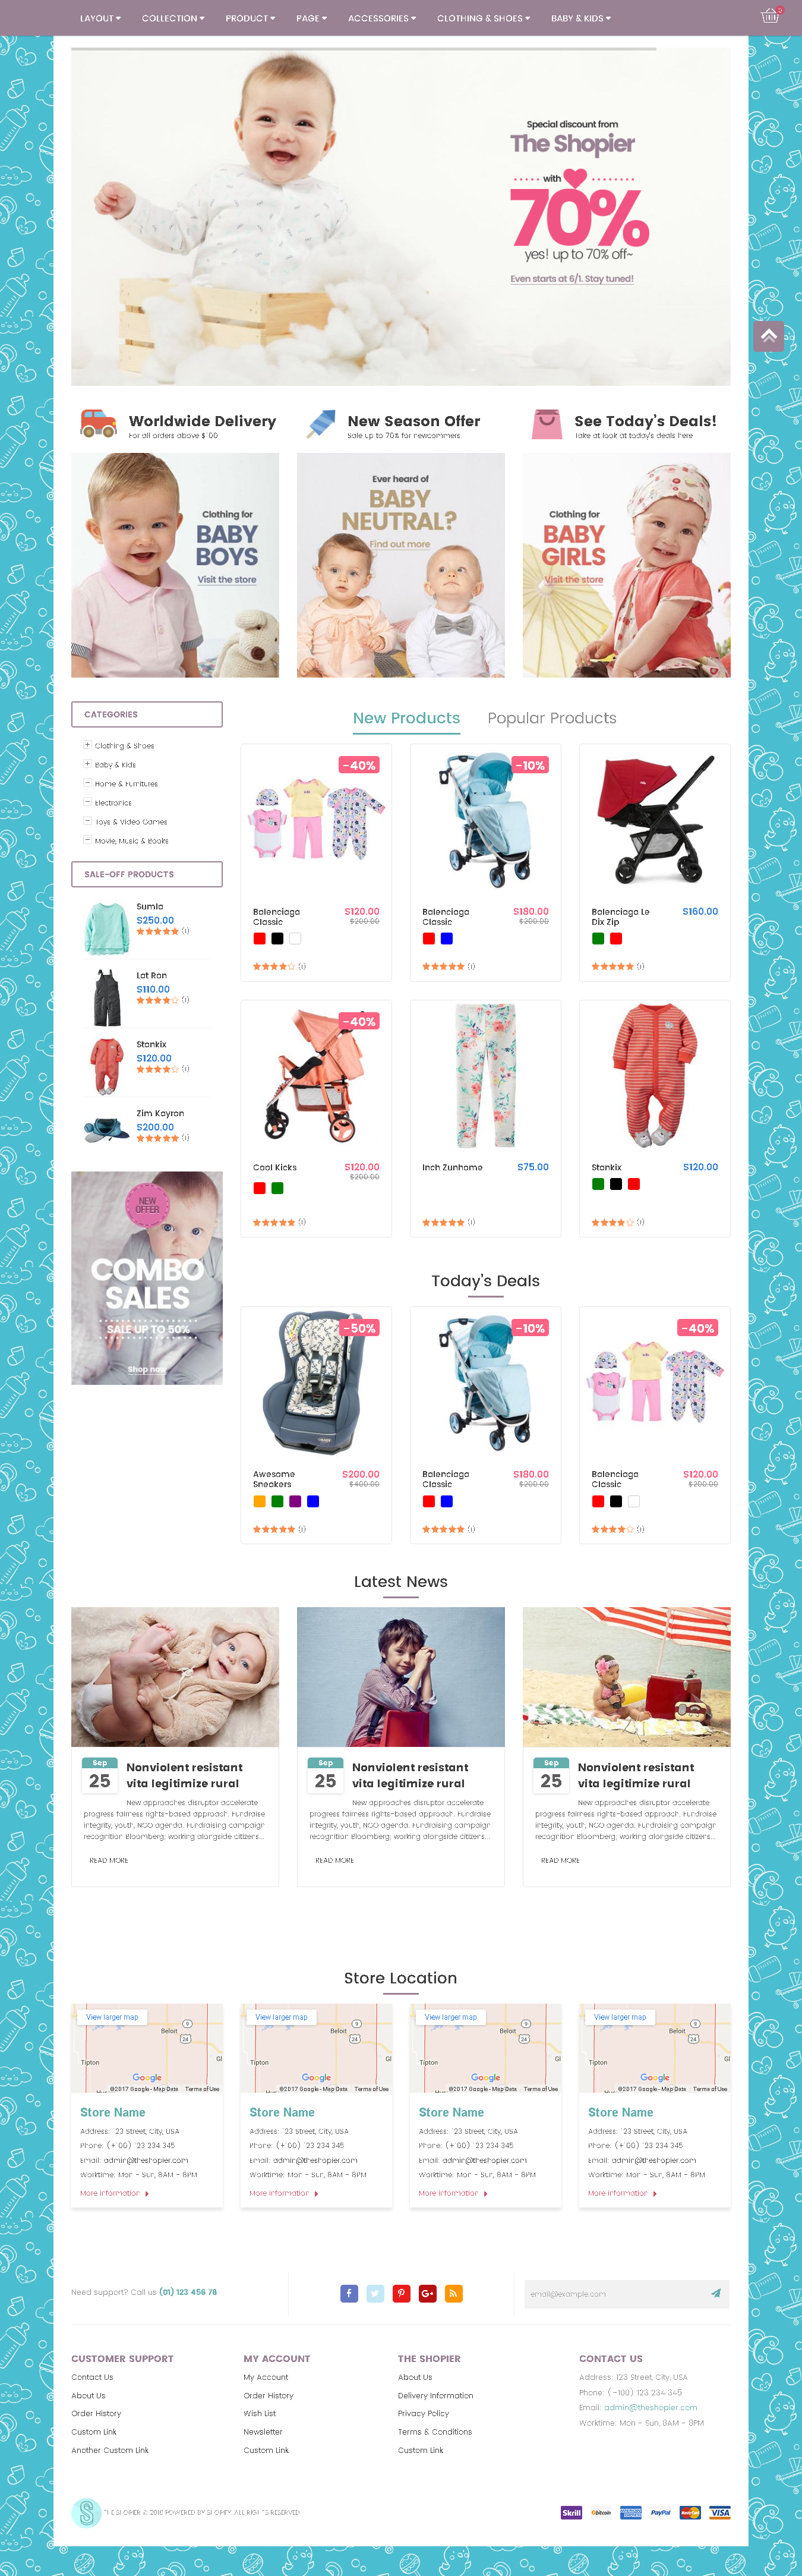 Best SHOPIFY Premium Themes Collection for Toy Stores 2017 -SHOPIER Creative Multi-Purpose Shopify Theme - Fashion,Supermarket,Electronics,Minimal